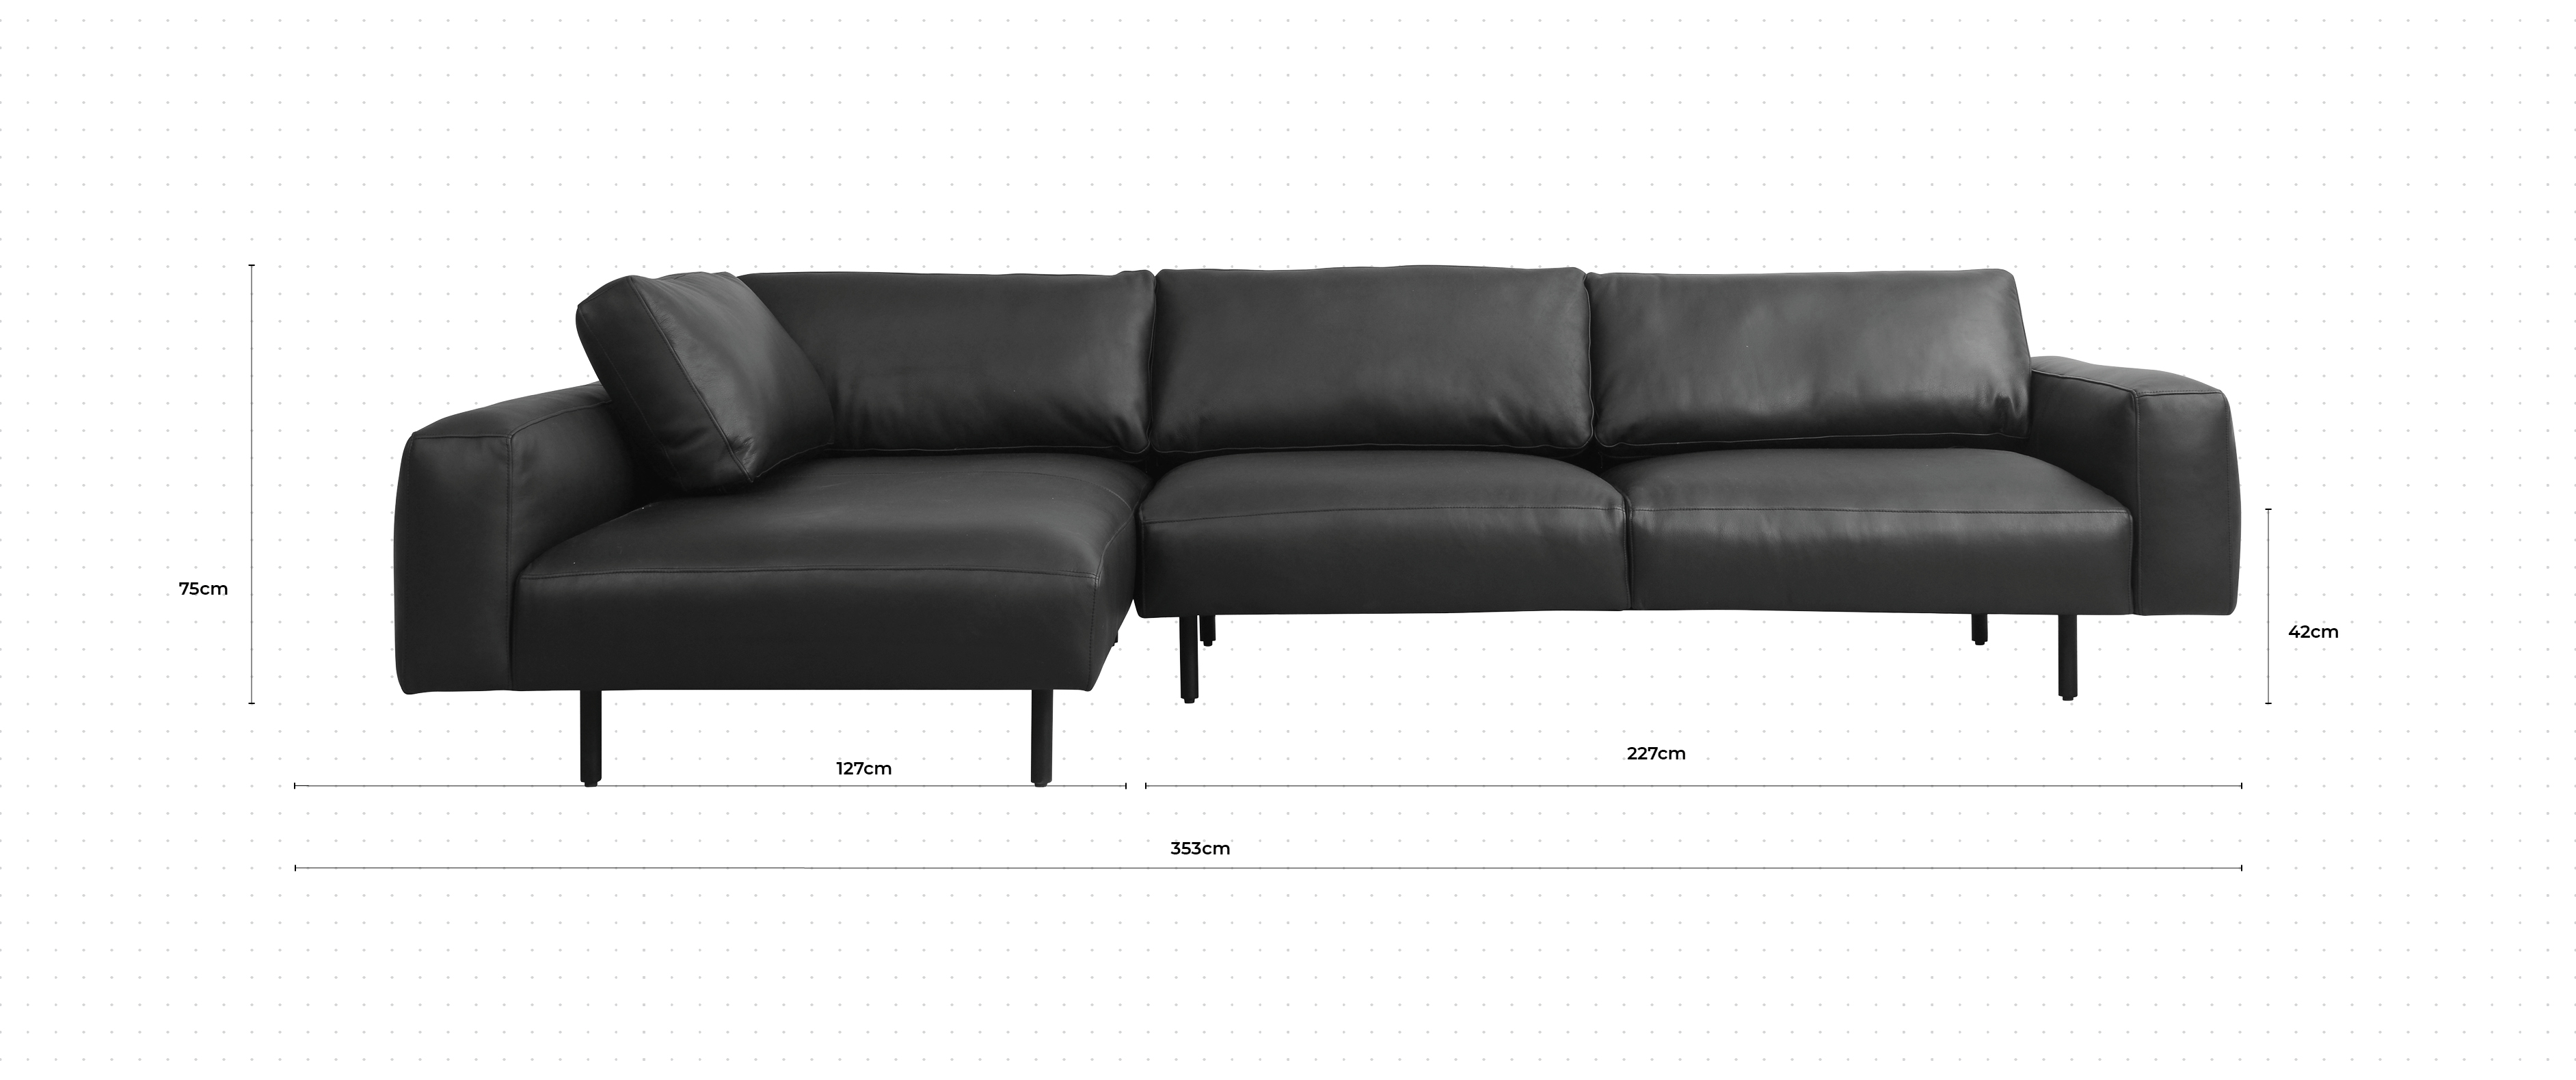 Nougat Large Chaise Sofa LHF dimensions